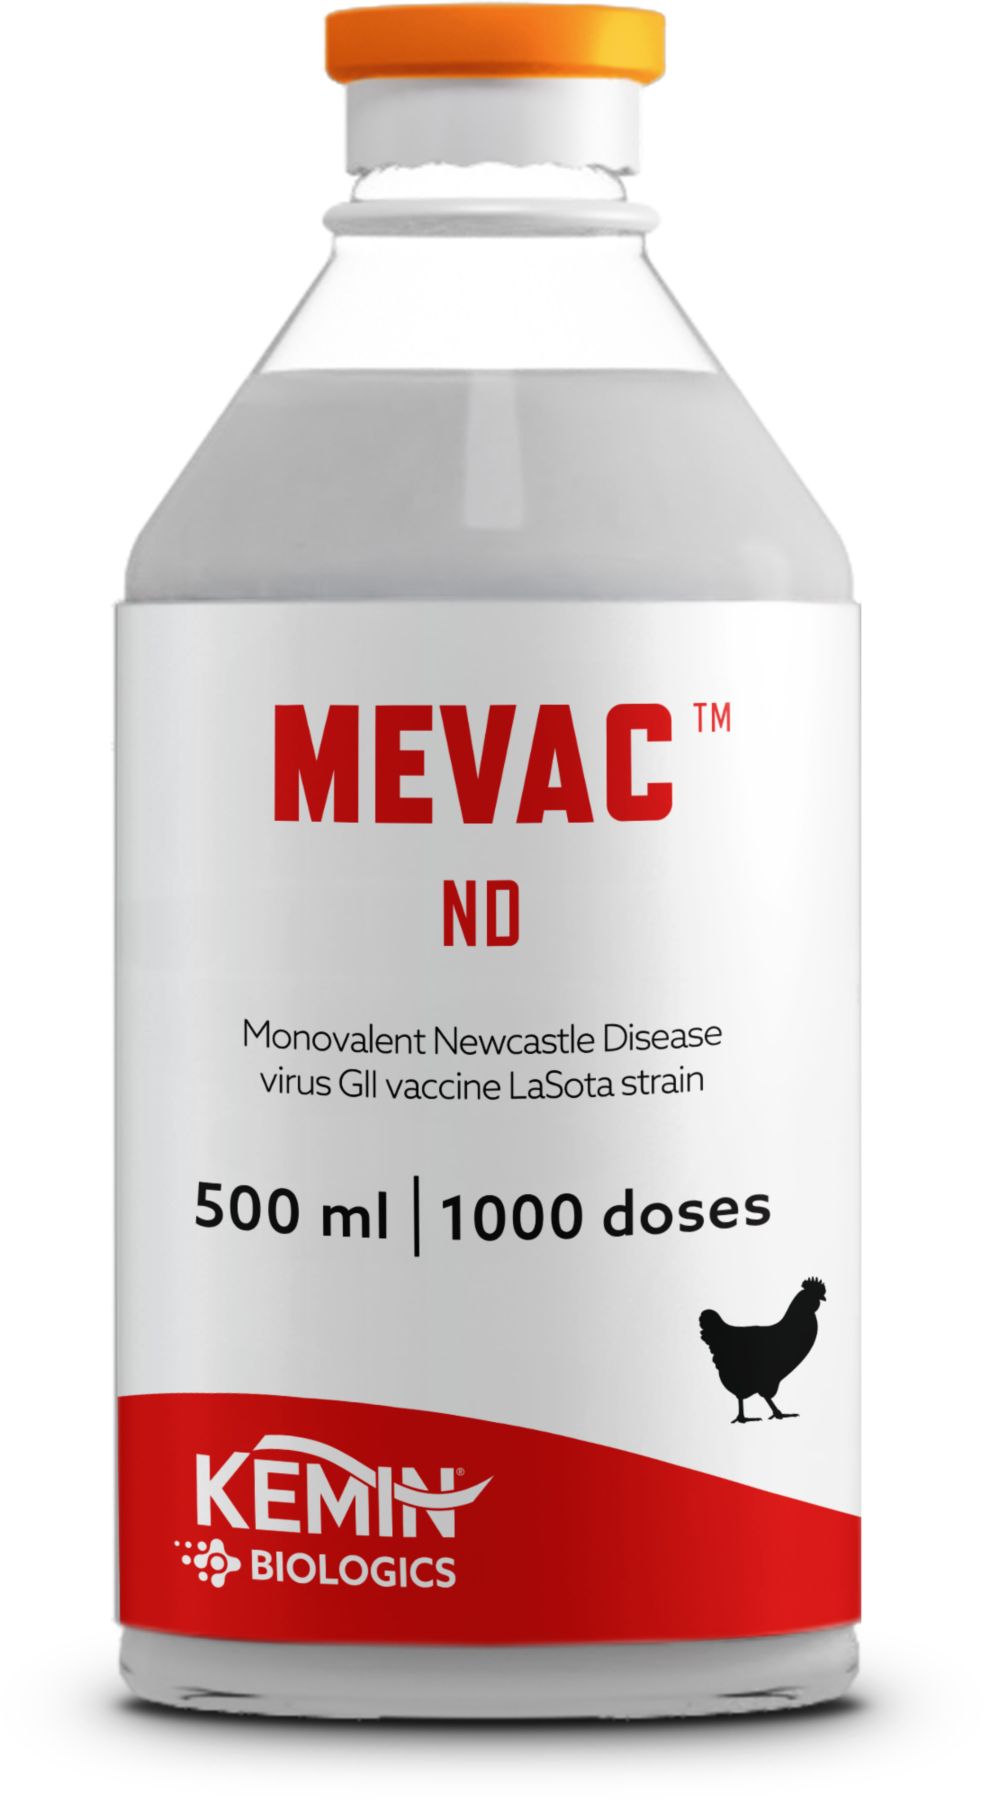 MEVAC ND big label mockup